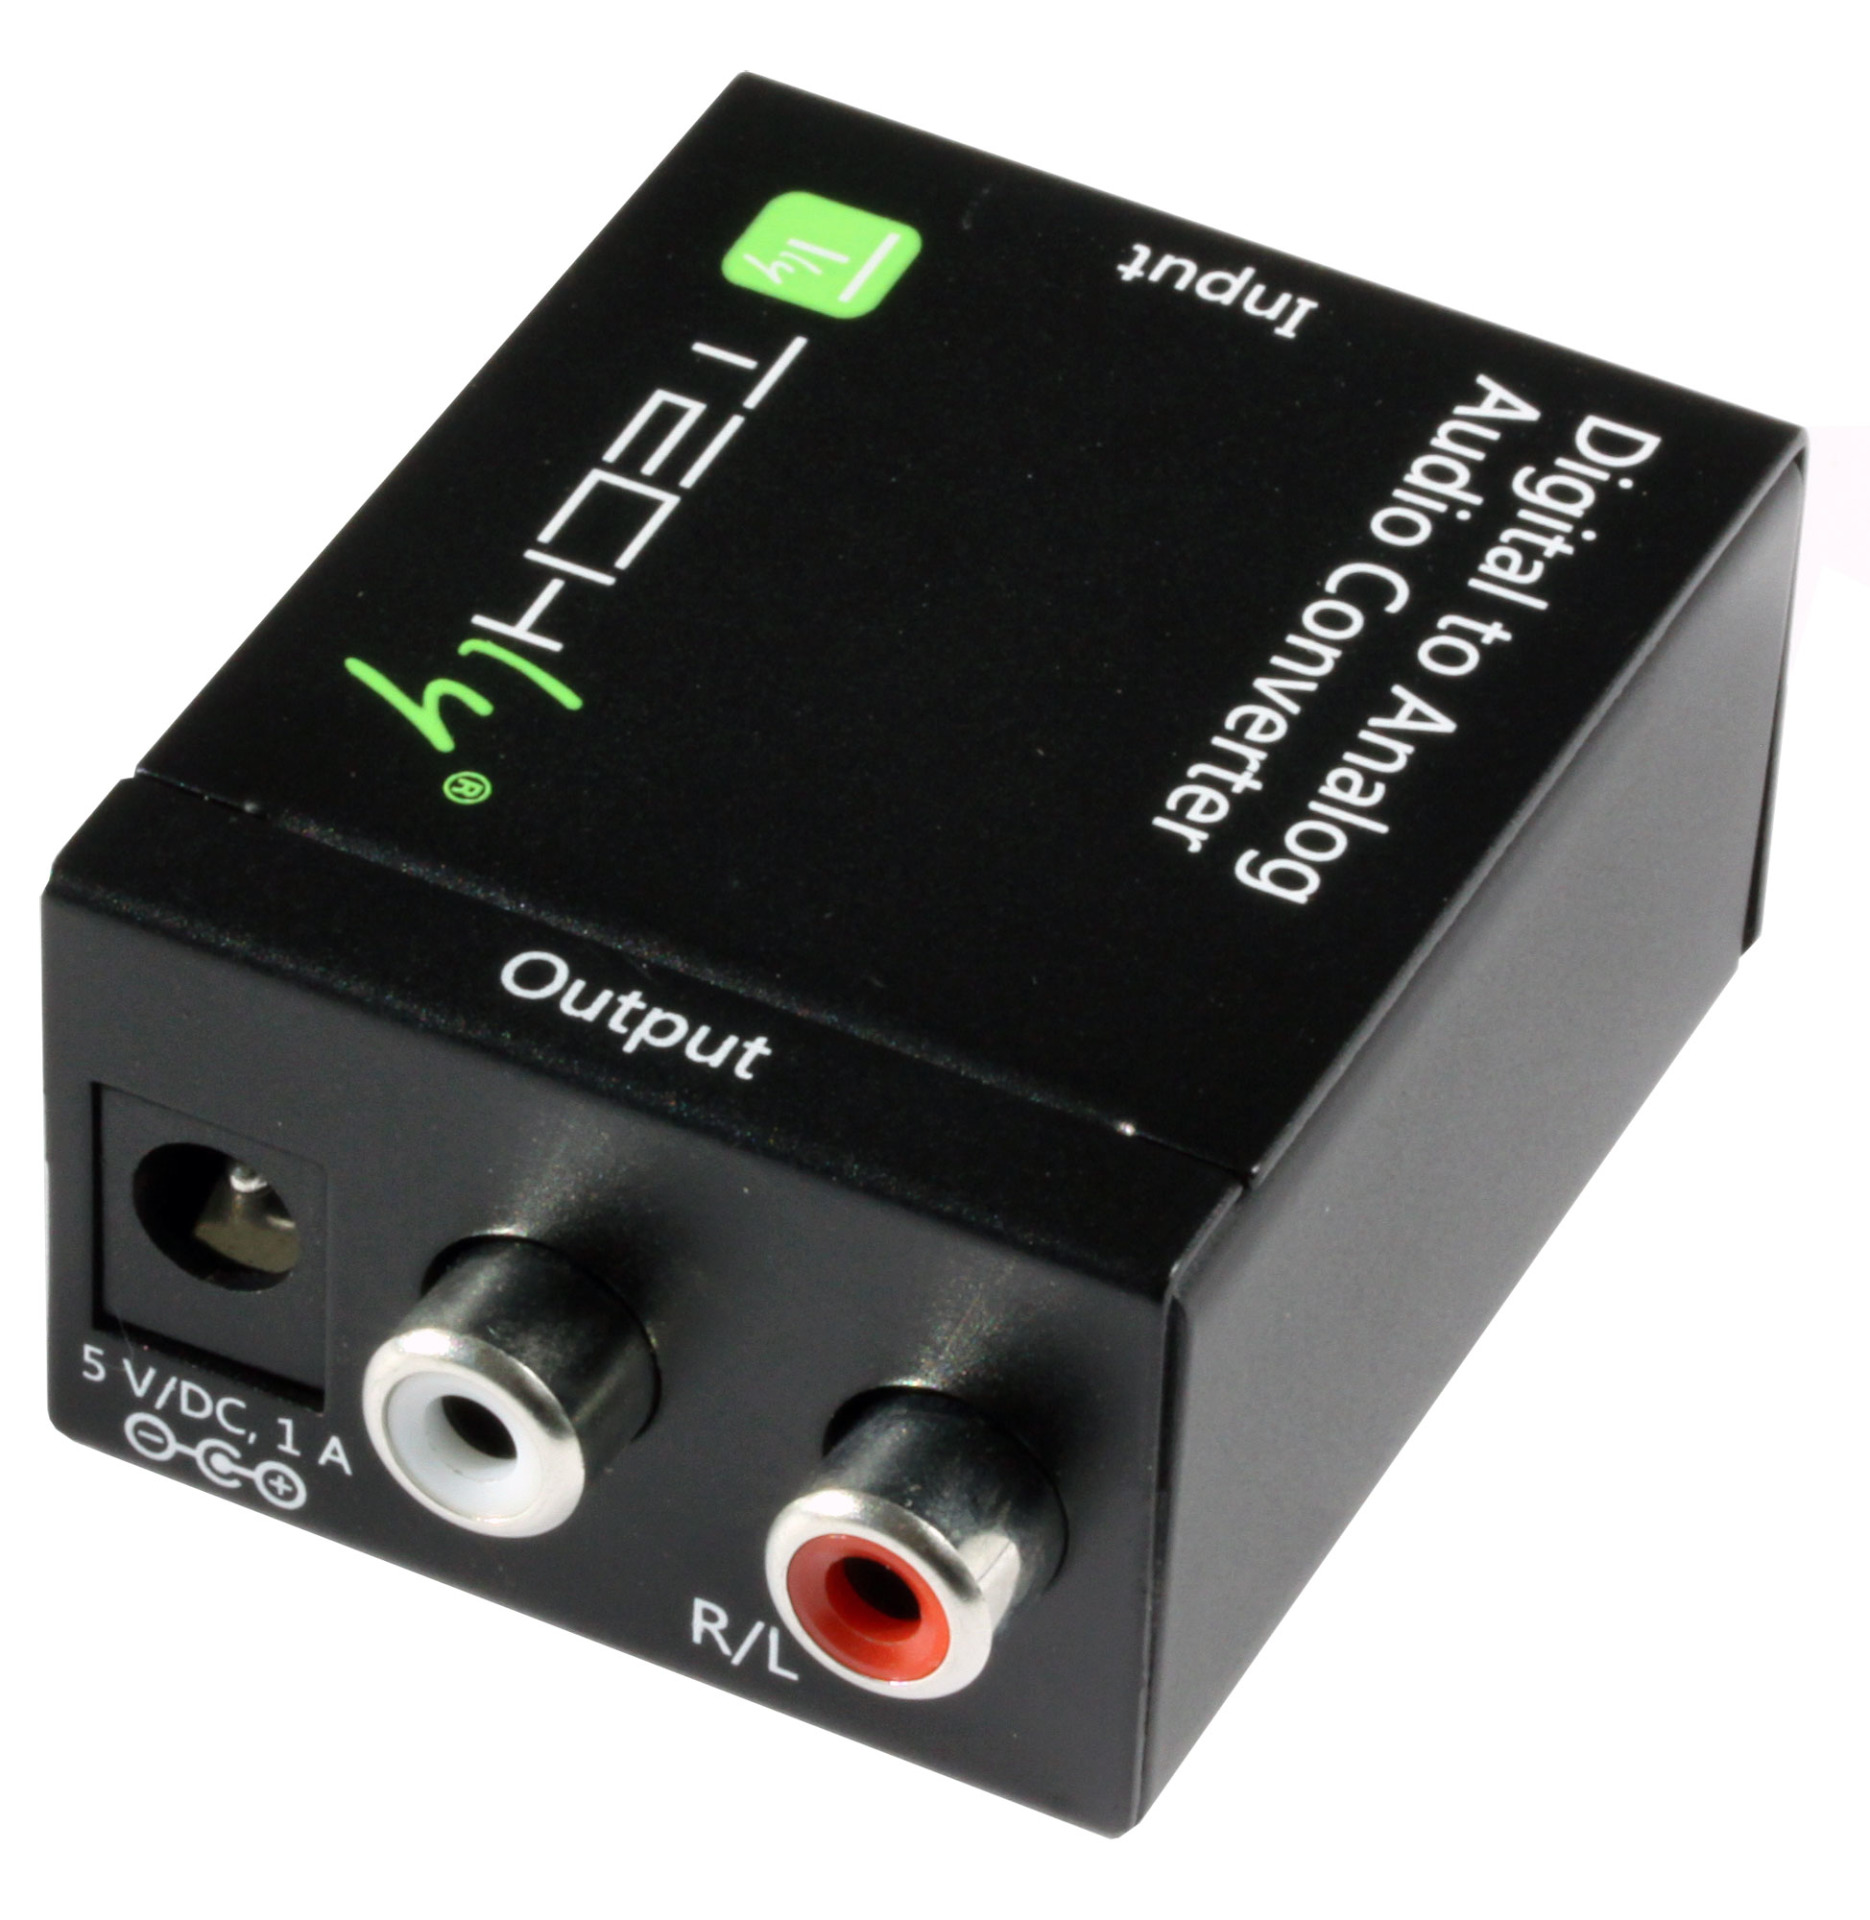 Digital Audio to Analog Audio Converter